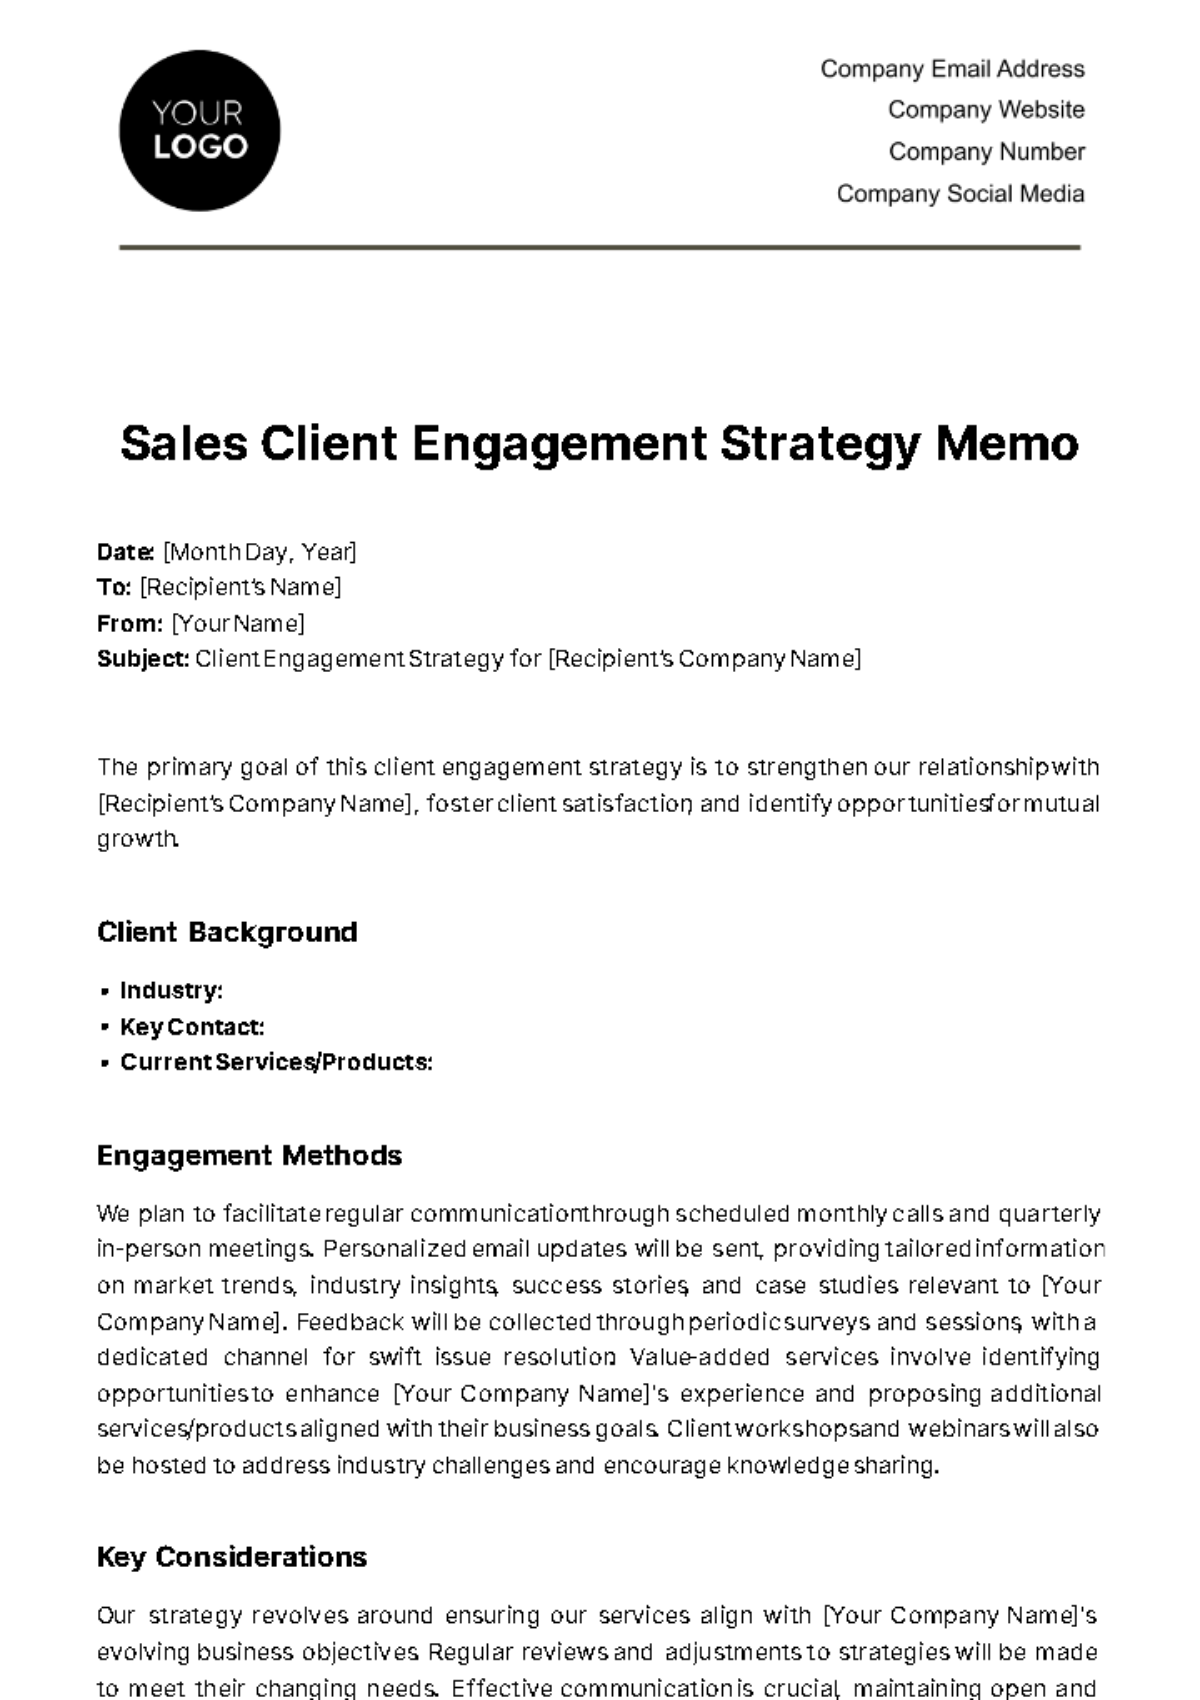 Sales Client Engagement Strategy Memo Template